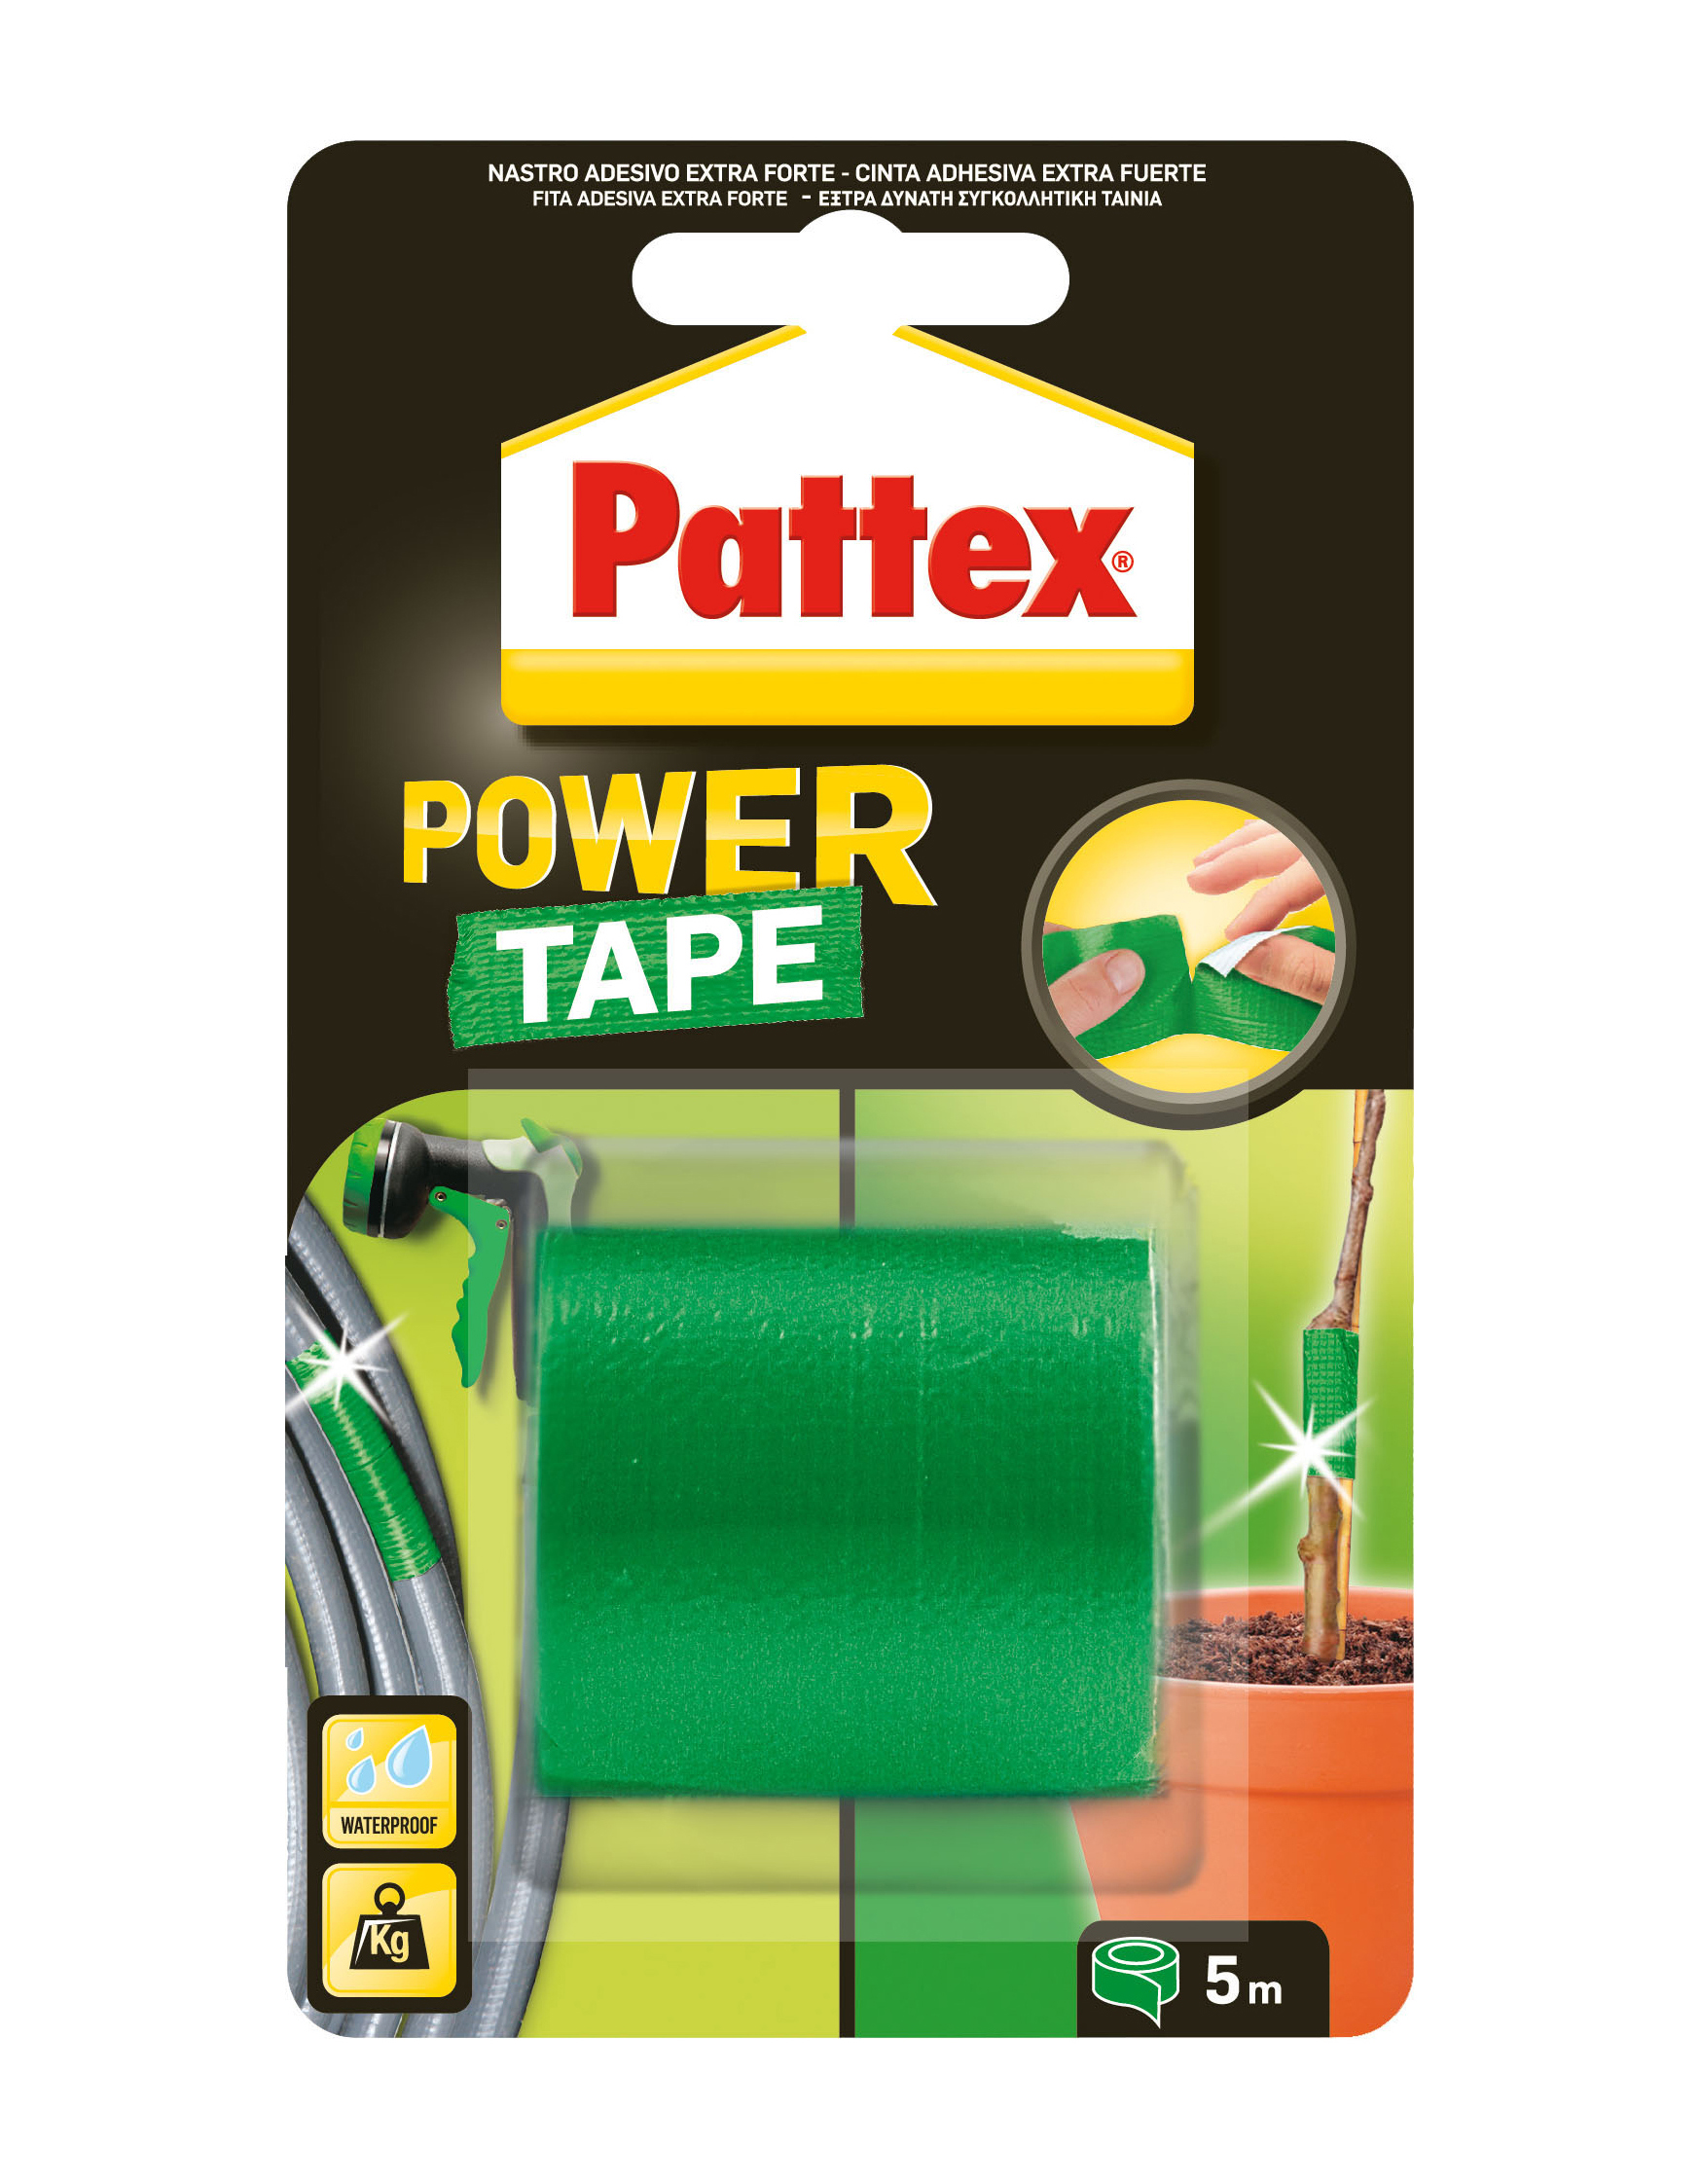 Pattex power tape verde 5m